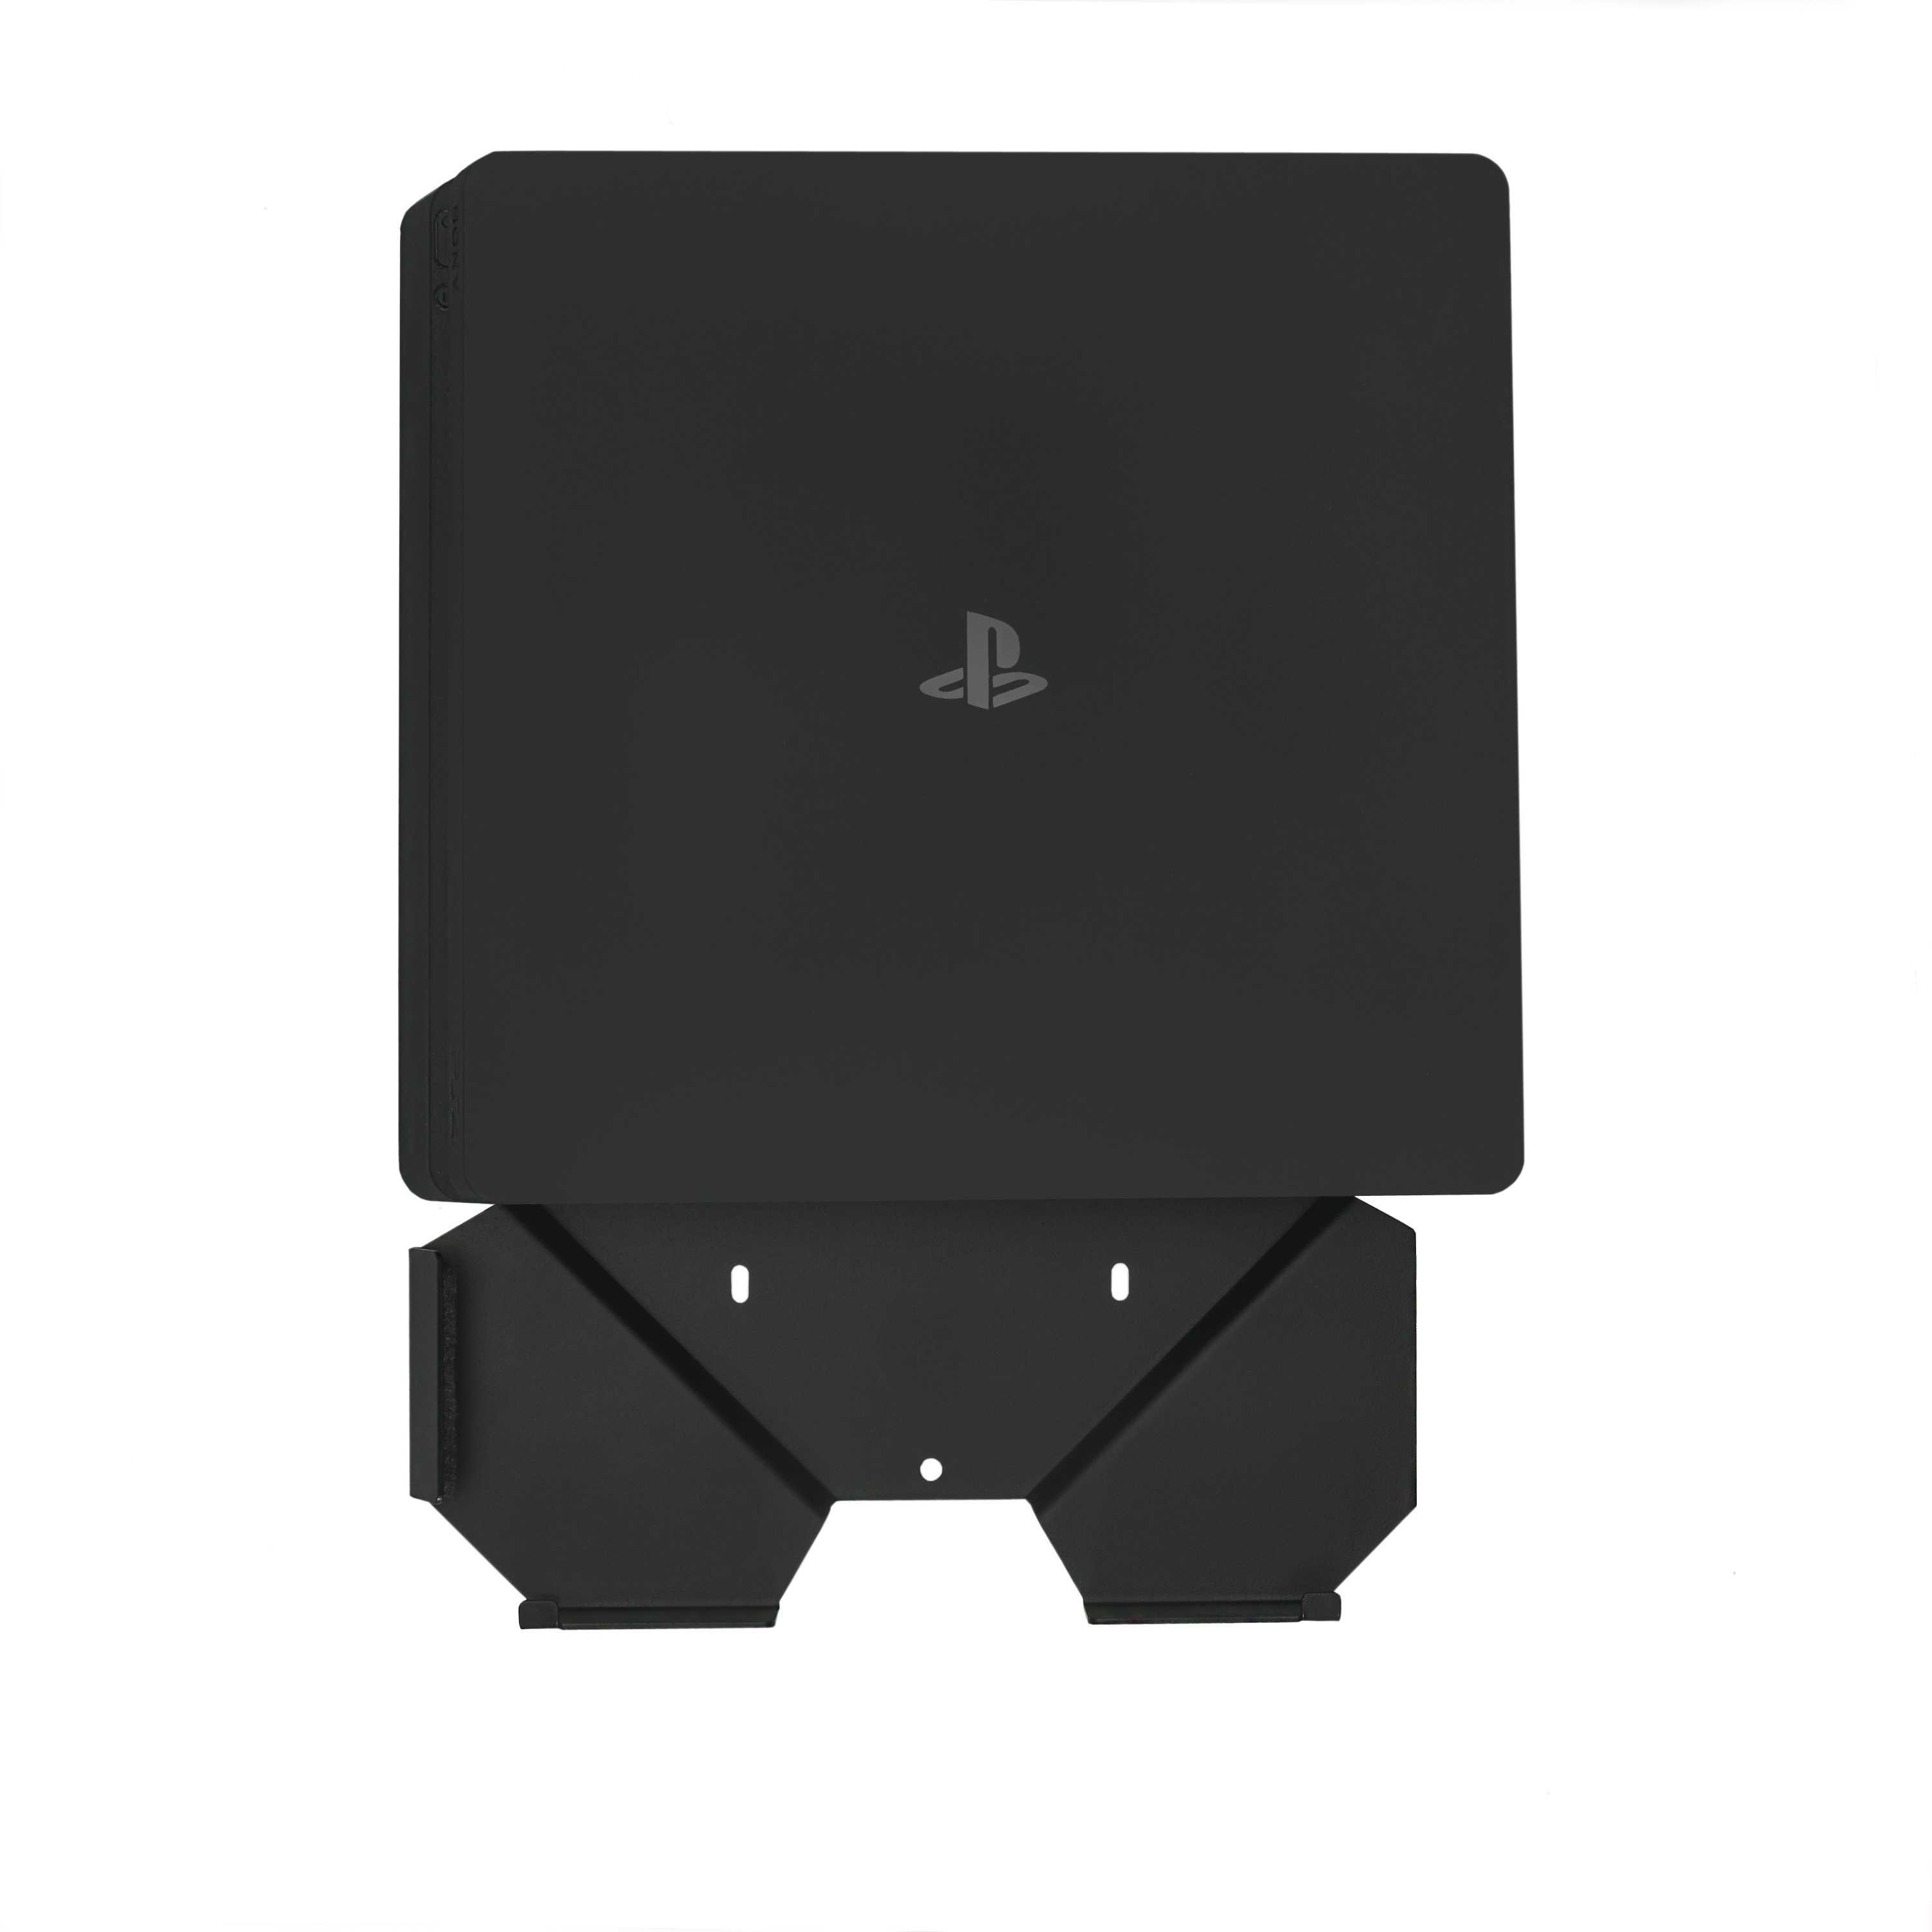 4MOUNT WALL MOUNT FOR PS4 PLAYSTATION 4 SLIM BLACK SET - 5